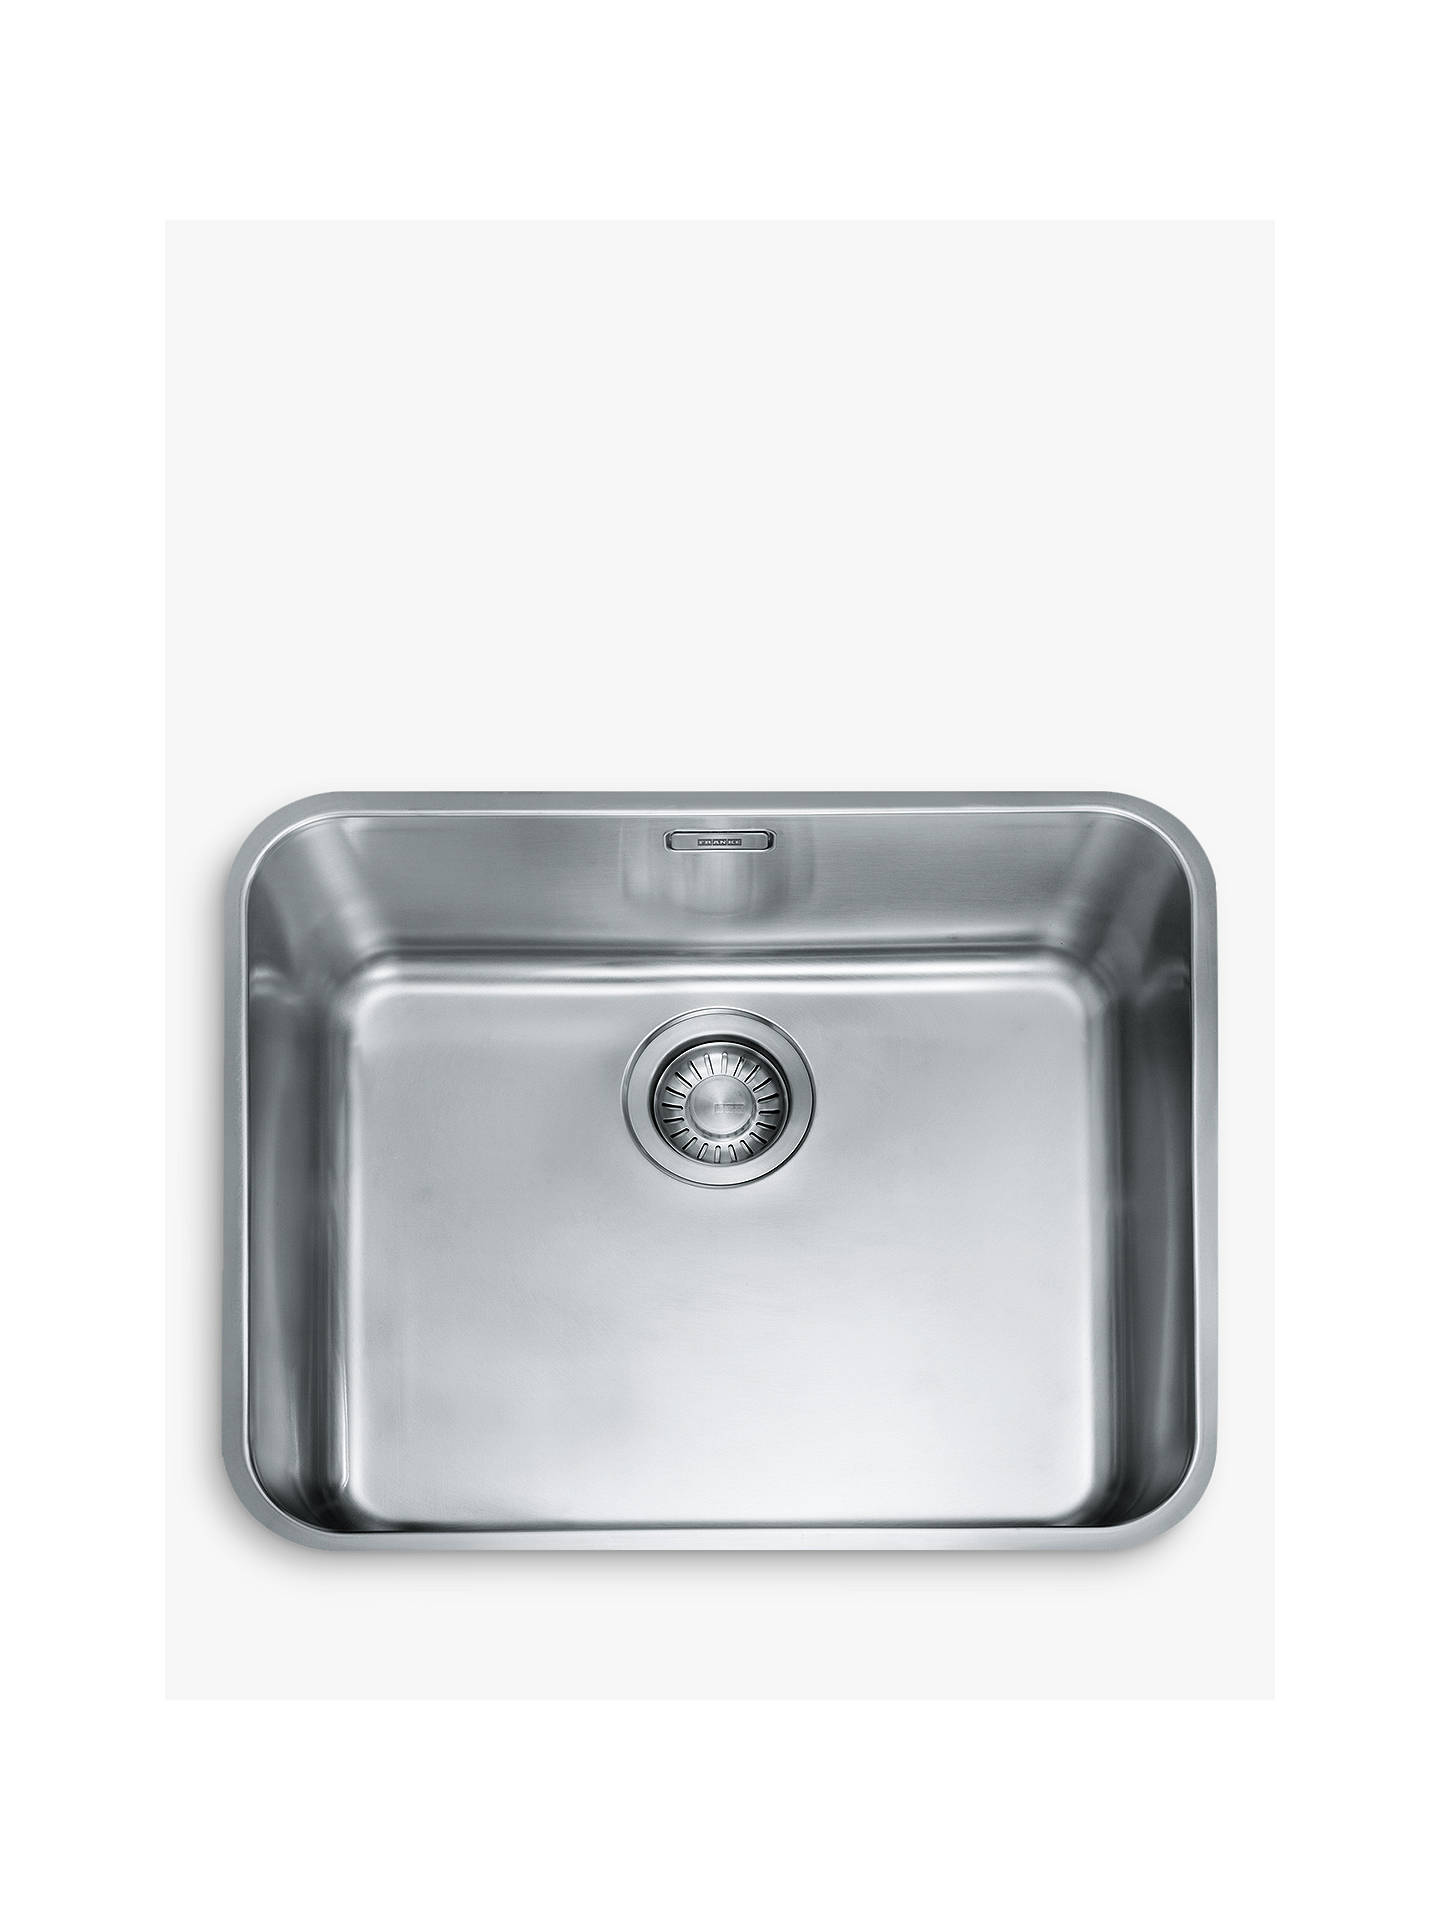 Franke Largo Lax 110 50 41 Undermounted Single Bowl Kitchen Sink Stainless Steel